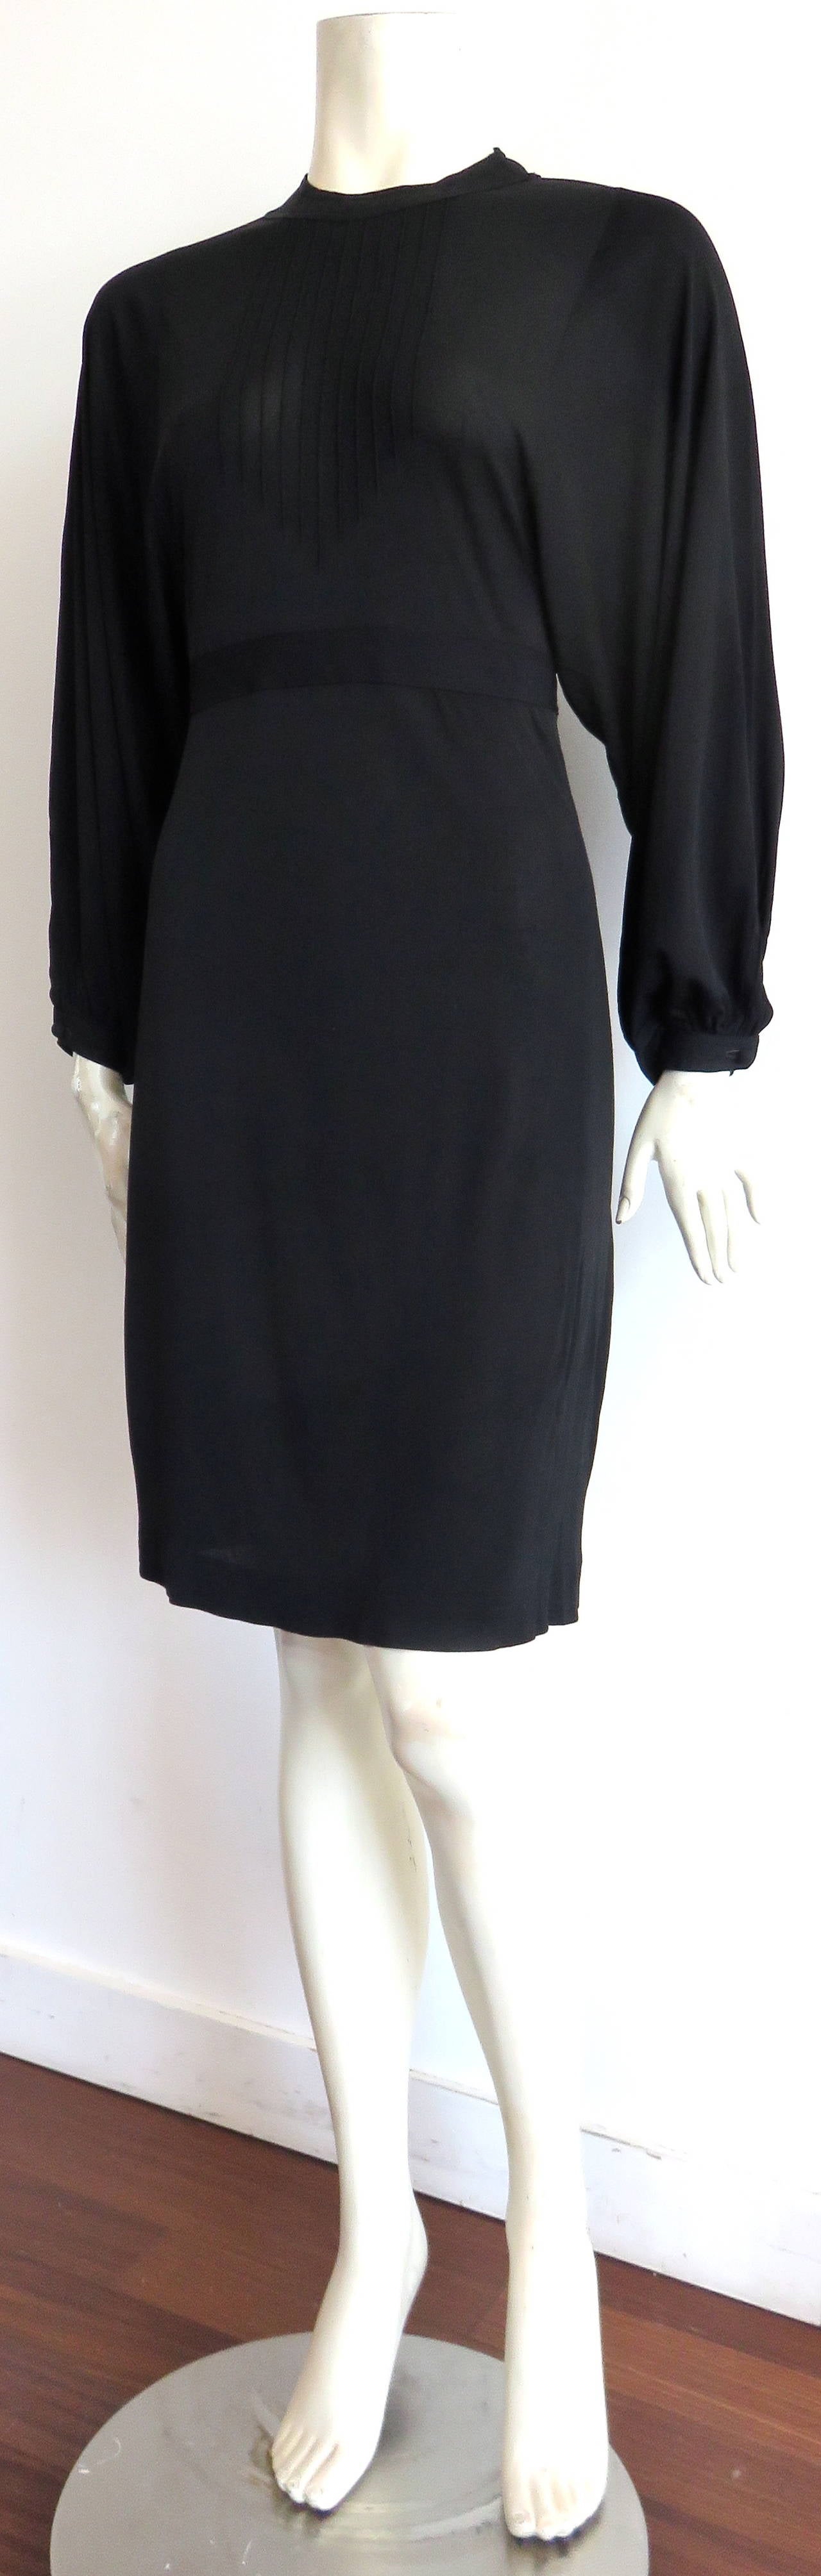 Women's 1970's JEAN MUIR Pin-tucked LBD dress For Sale